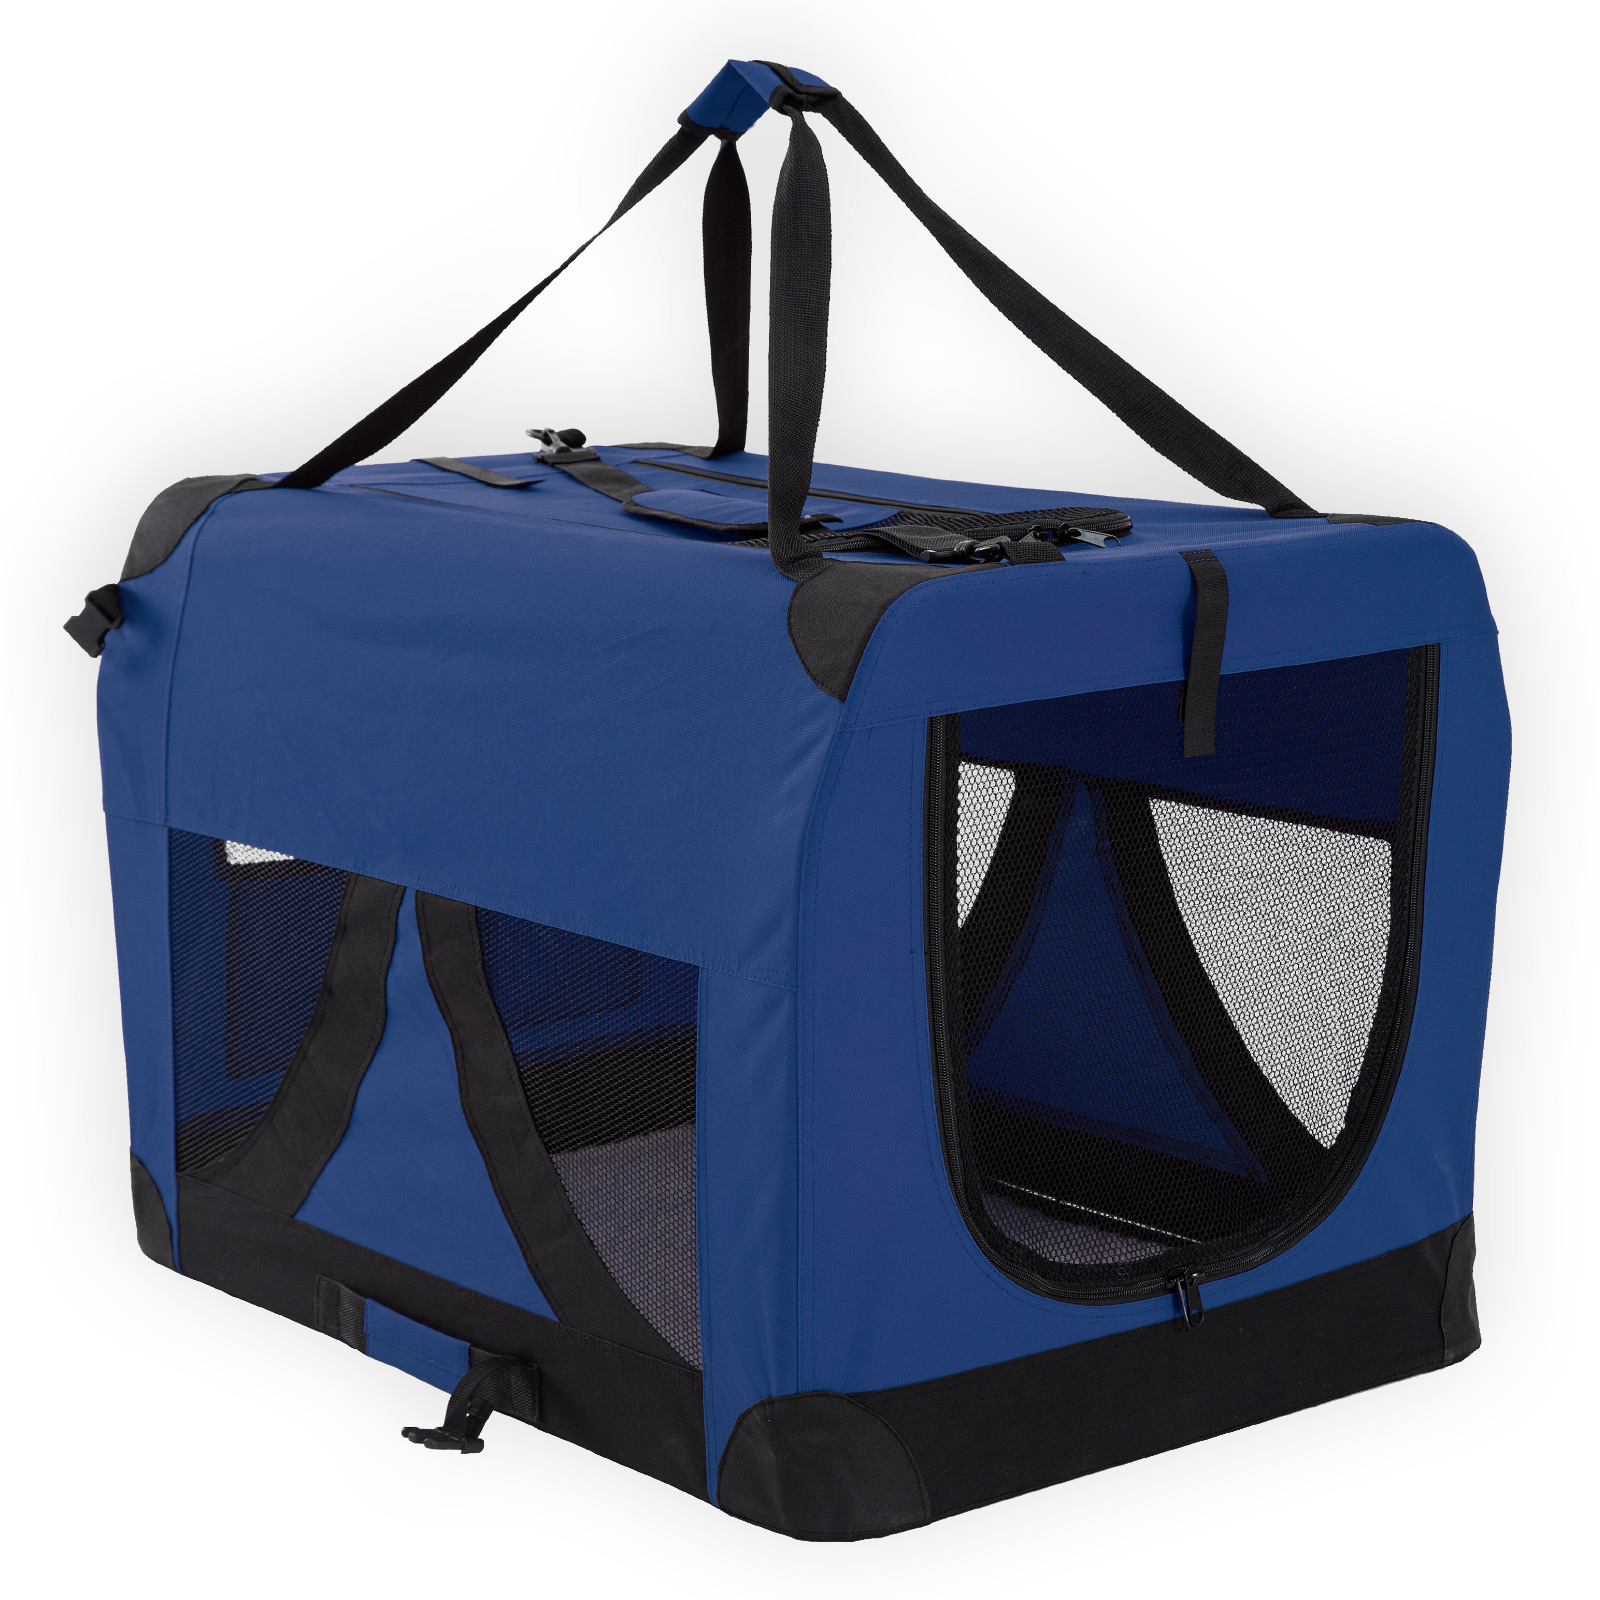 XXXL Portable Soft Dog Crate - BLUE